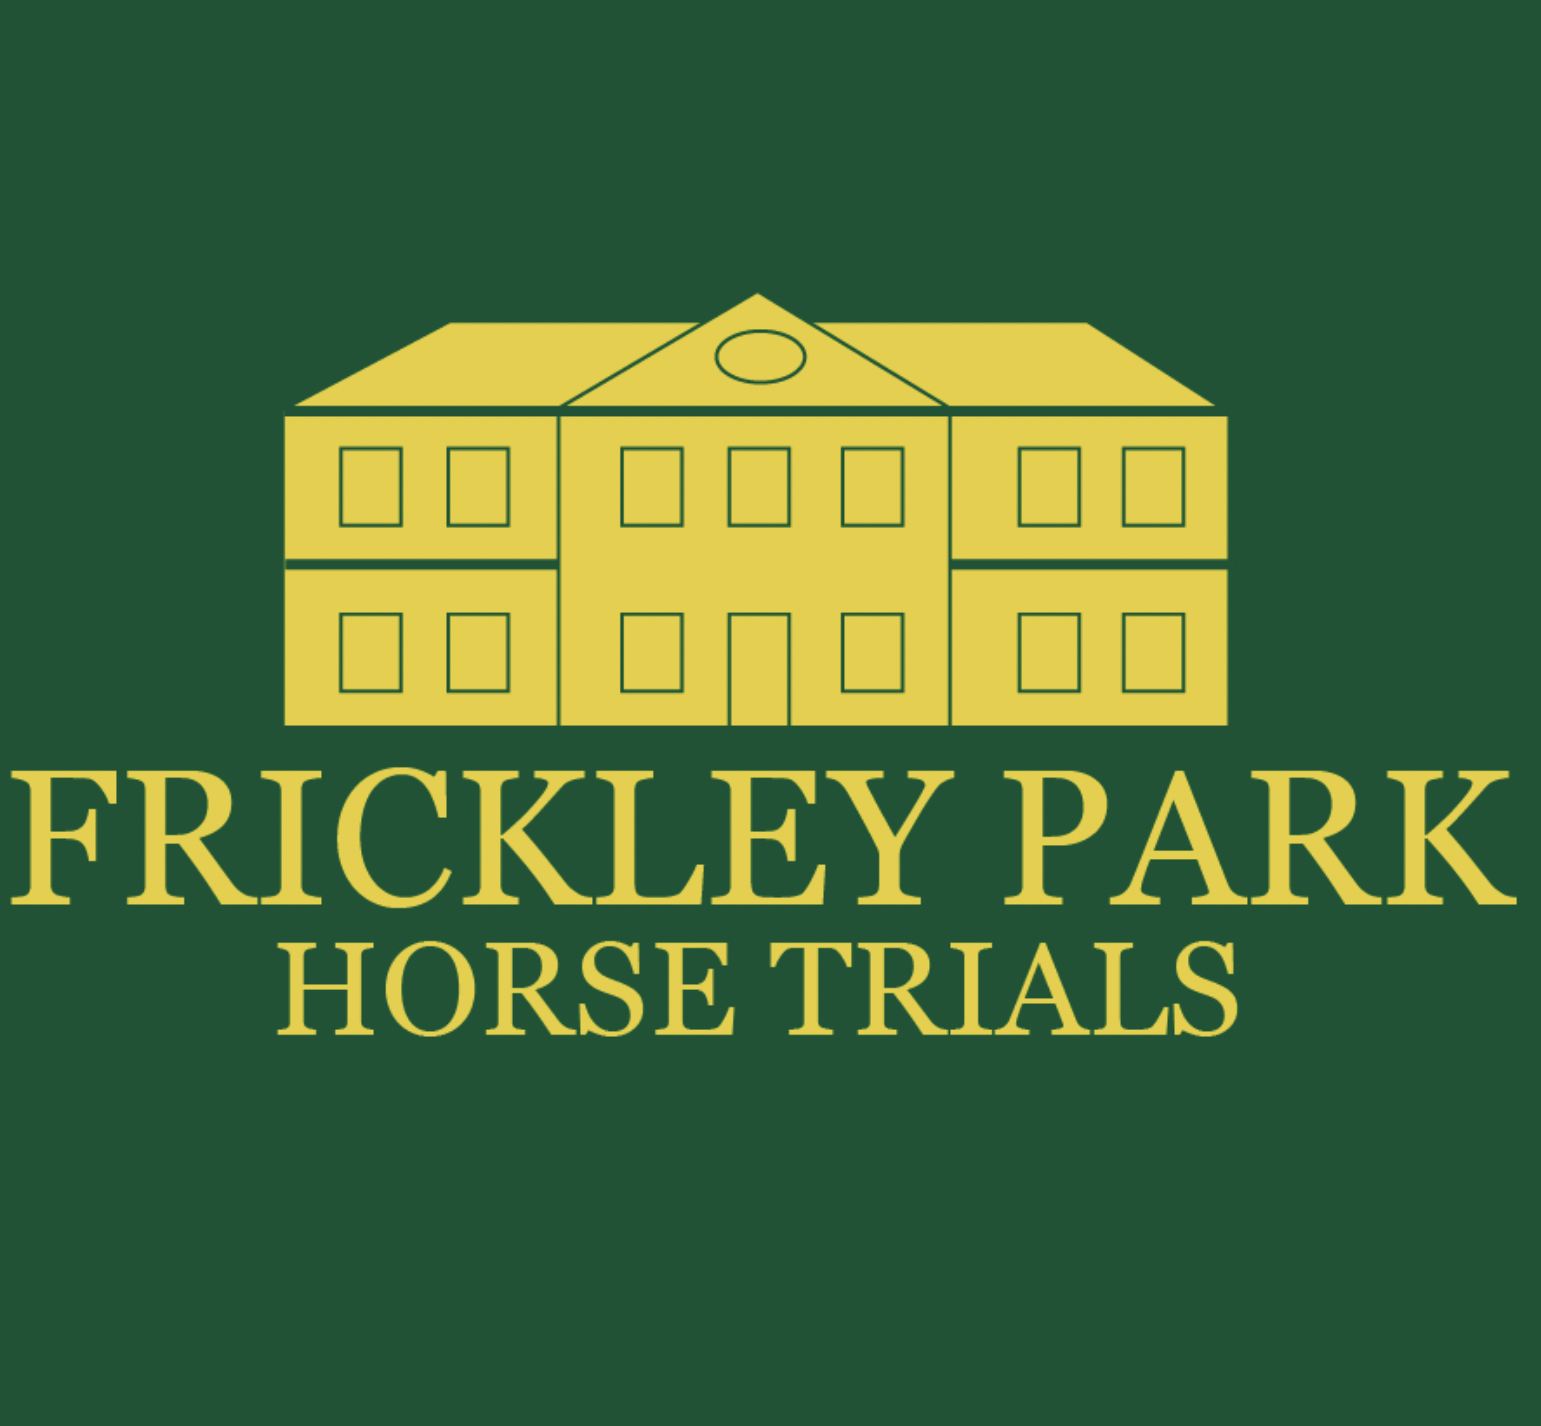 Frickley Park